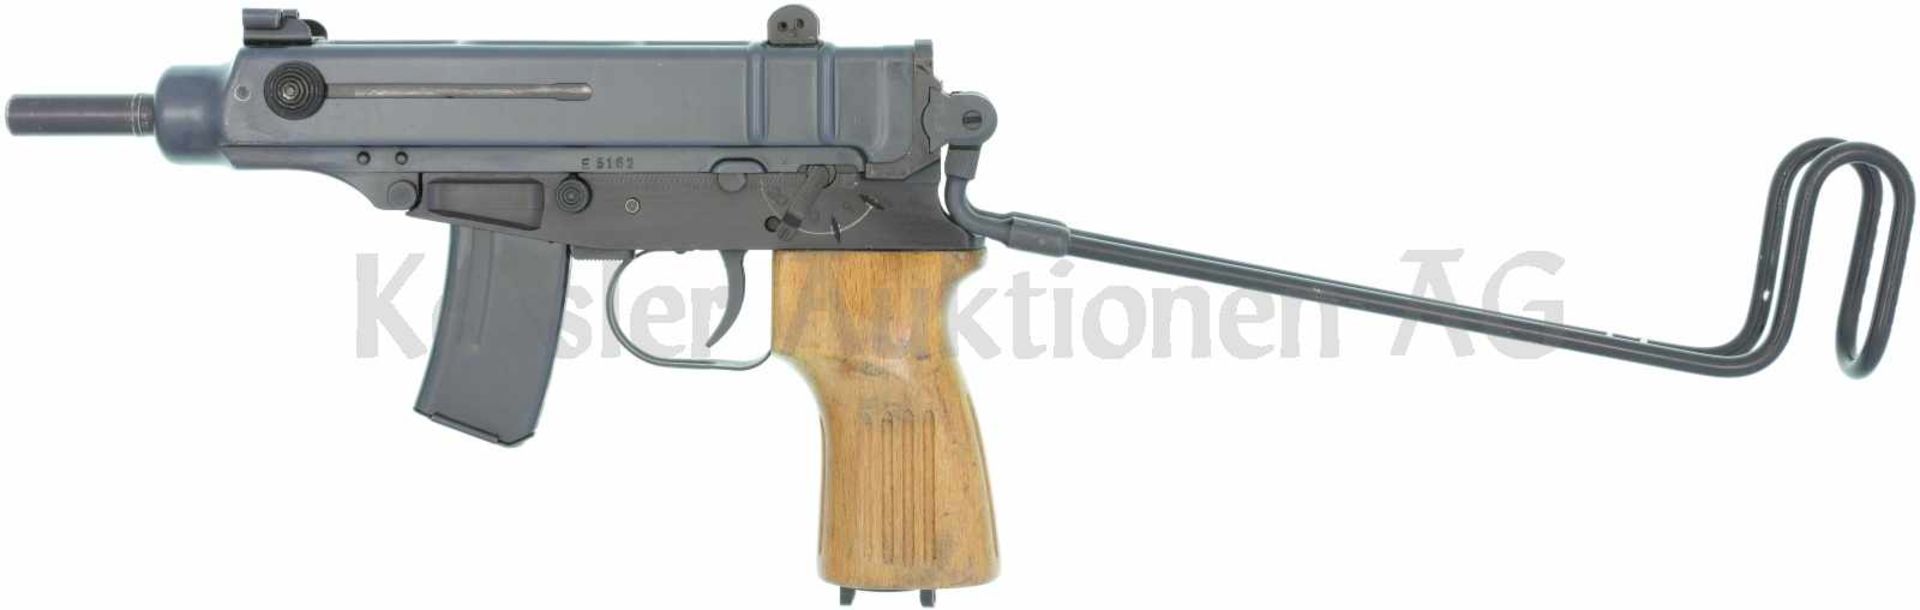 Klein Maschinenpistole, Scorpion VZ 61, Kal. 7.65mm LL 112mm, Abzuggehäuse aus gefrästem Stahl,